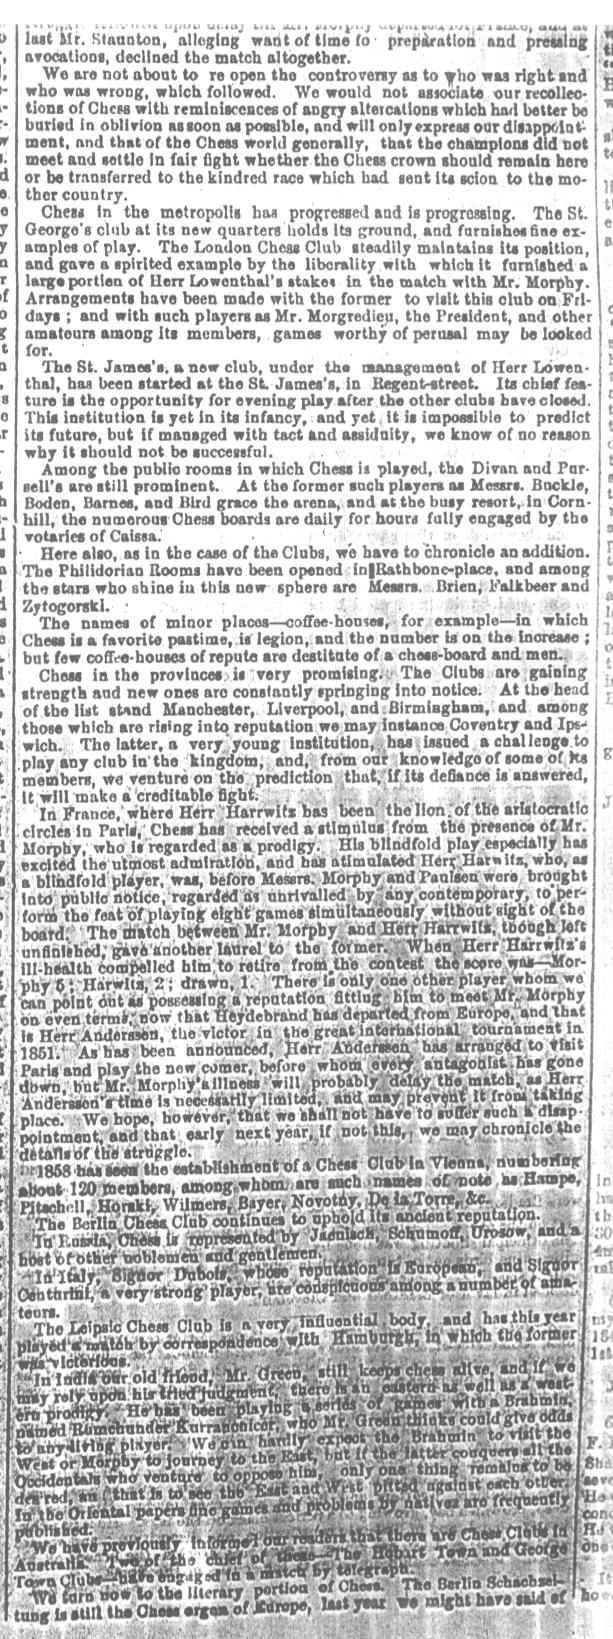 1859.01.29-06 New York Spirit of the Times.jpg